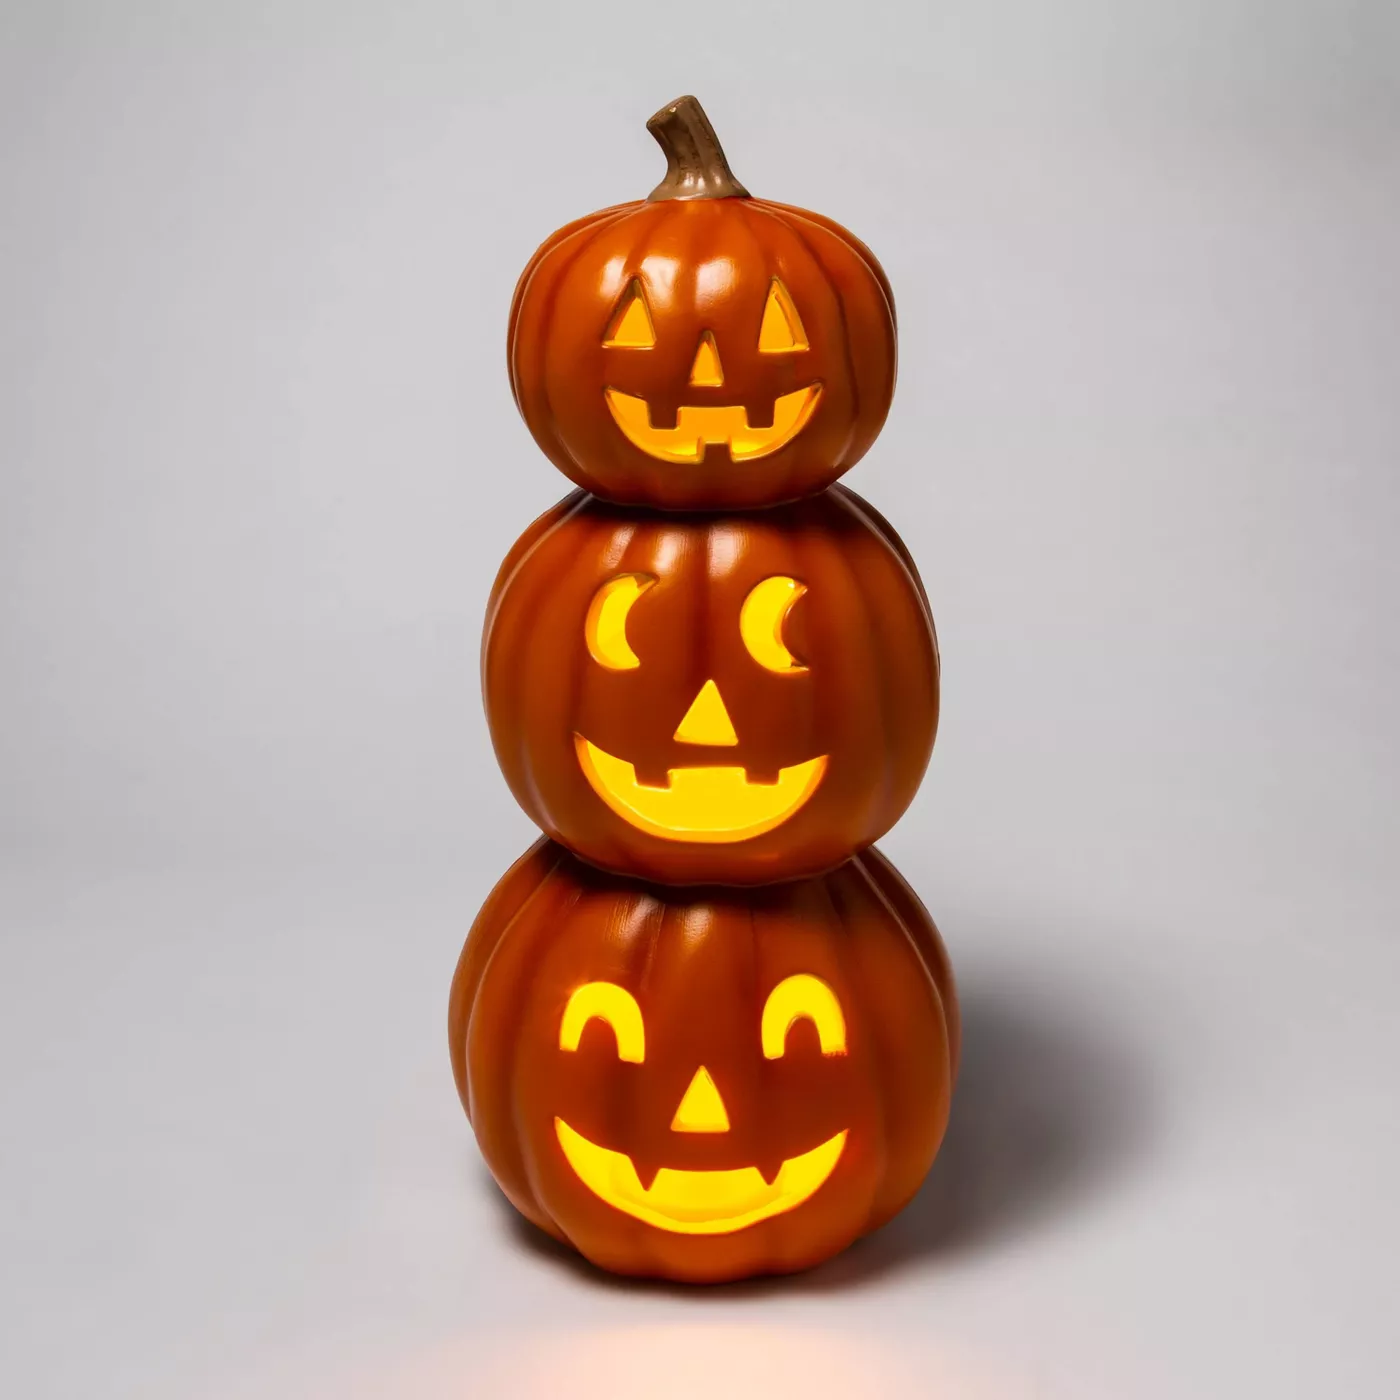 Light Up Triple Stacked Orange Pumpkins Halloween Decorative Prop - Hyde & EEK! Boutique™ - image 1 of 4